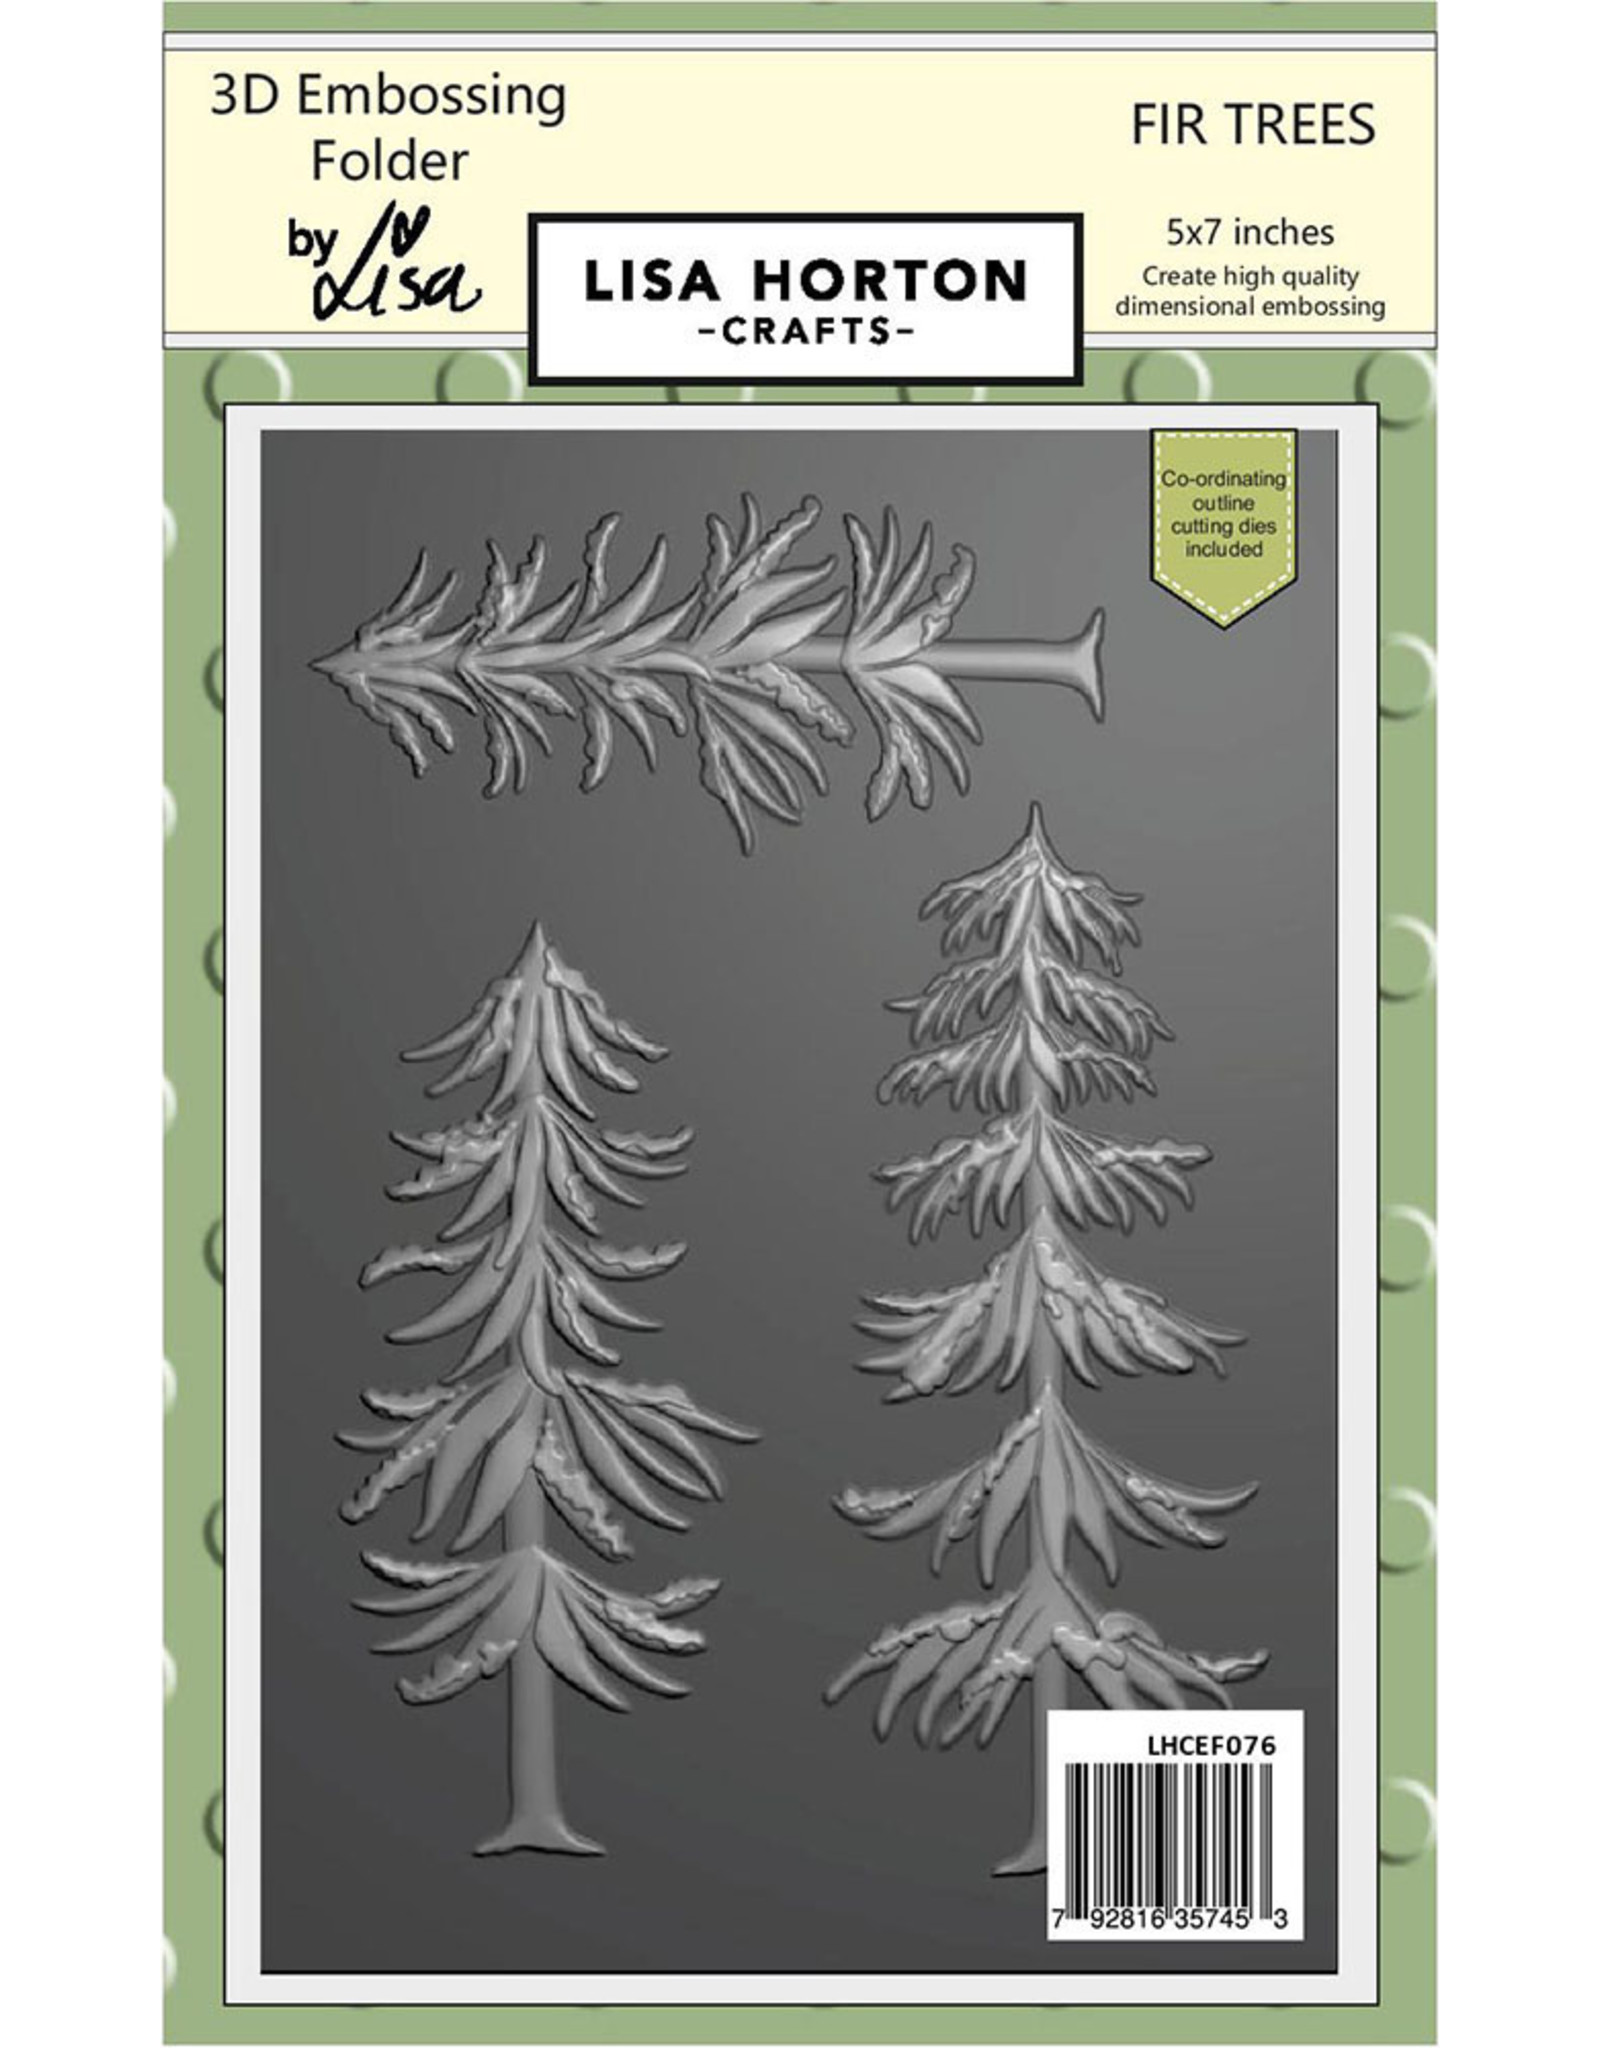 Lisa Horton Crafts 3D Embossing Folder 5x7 With Cutting Dies - Fir Trees